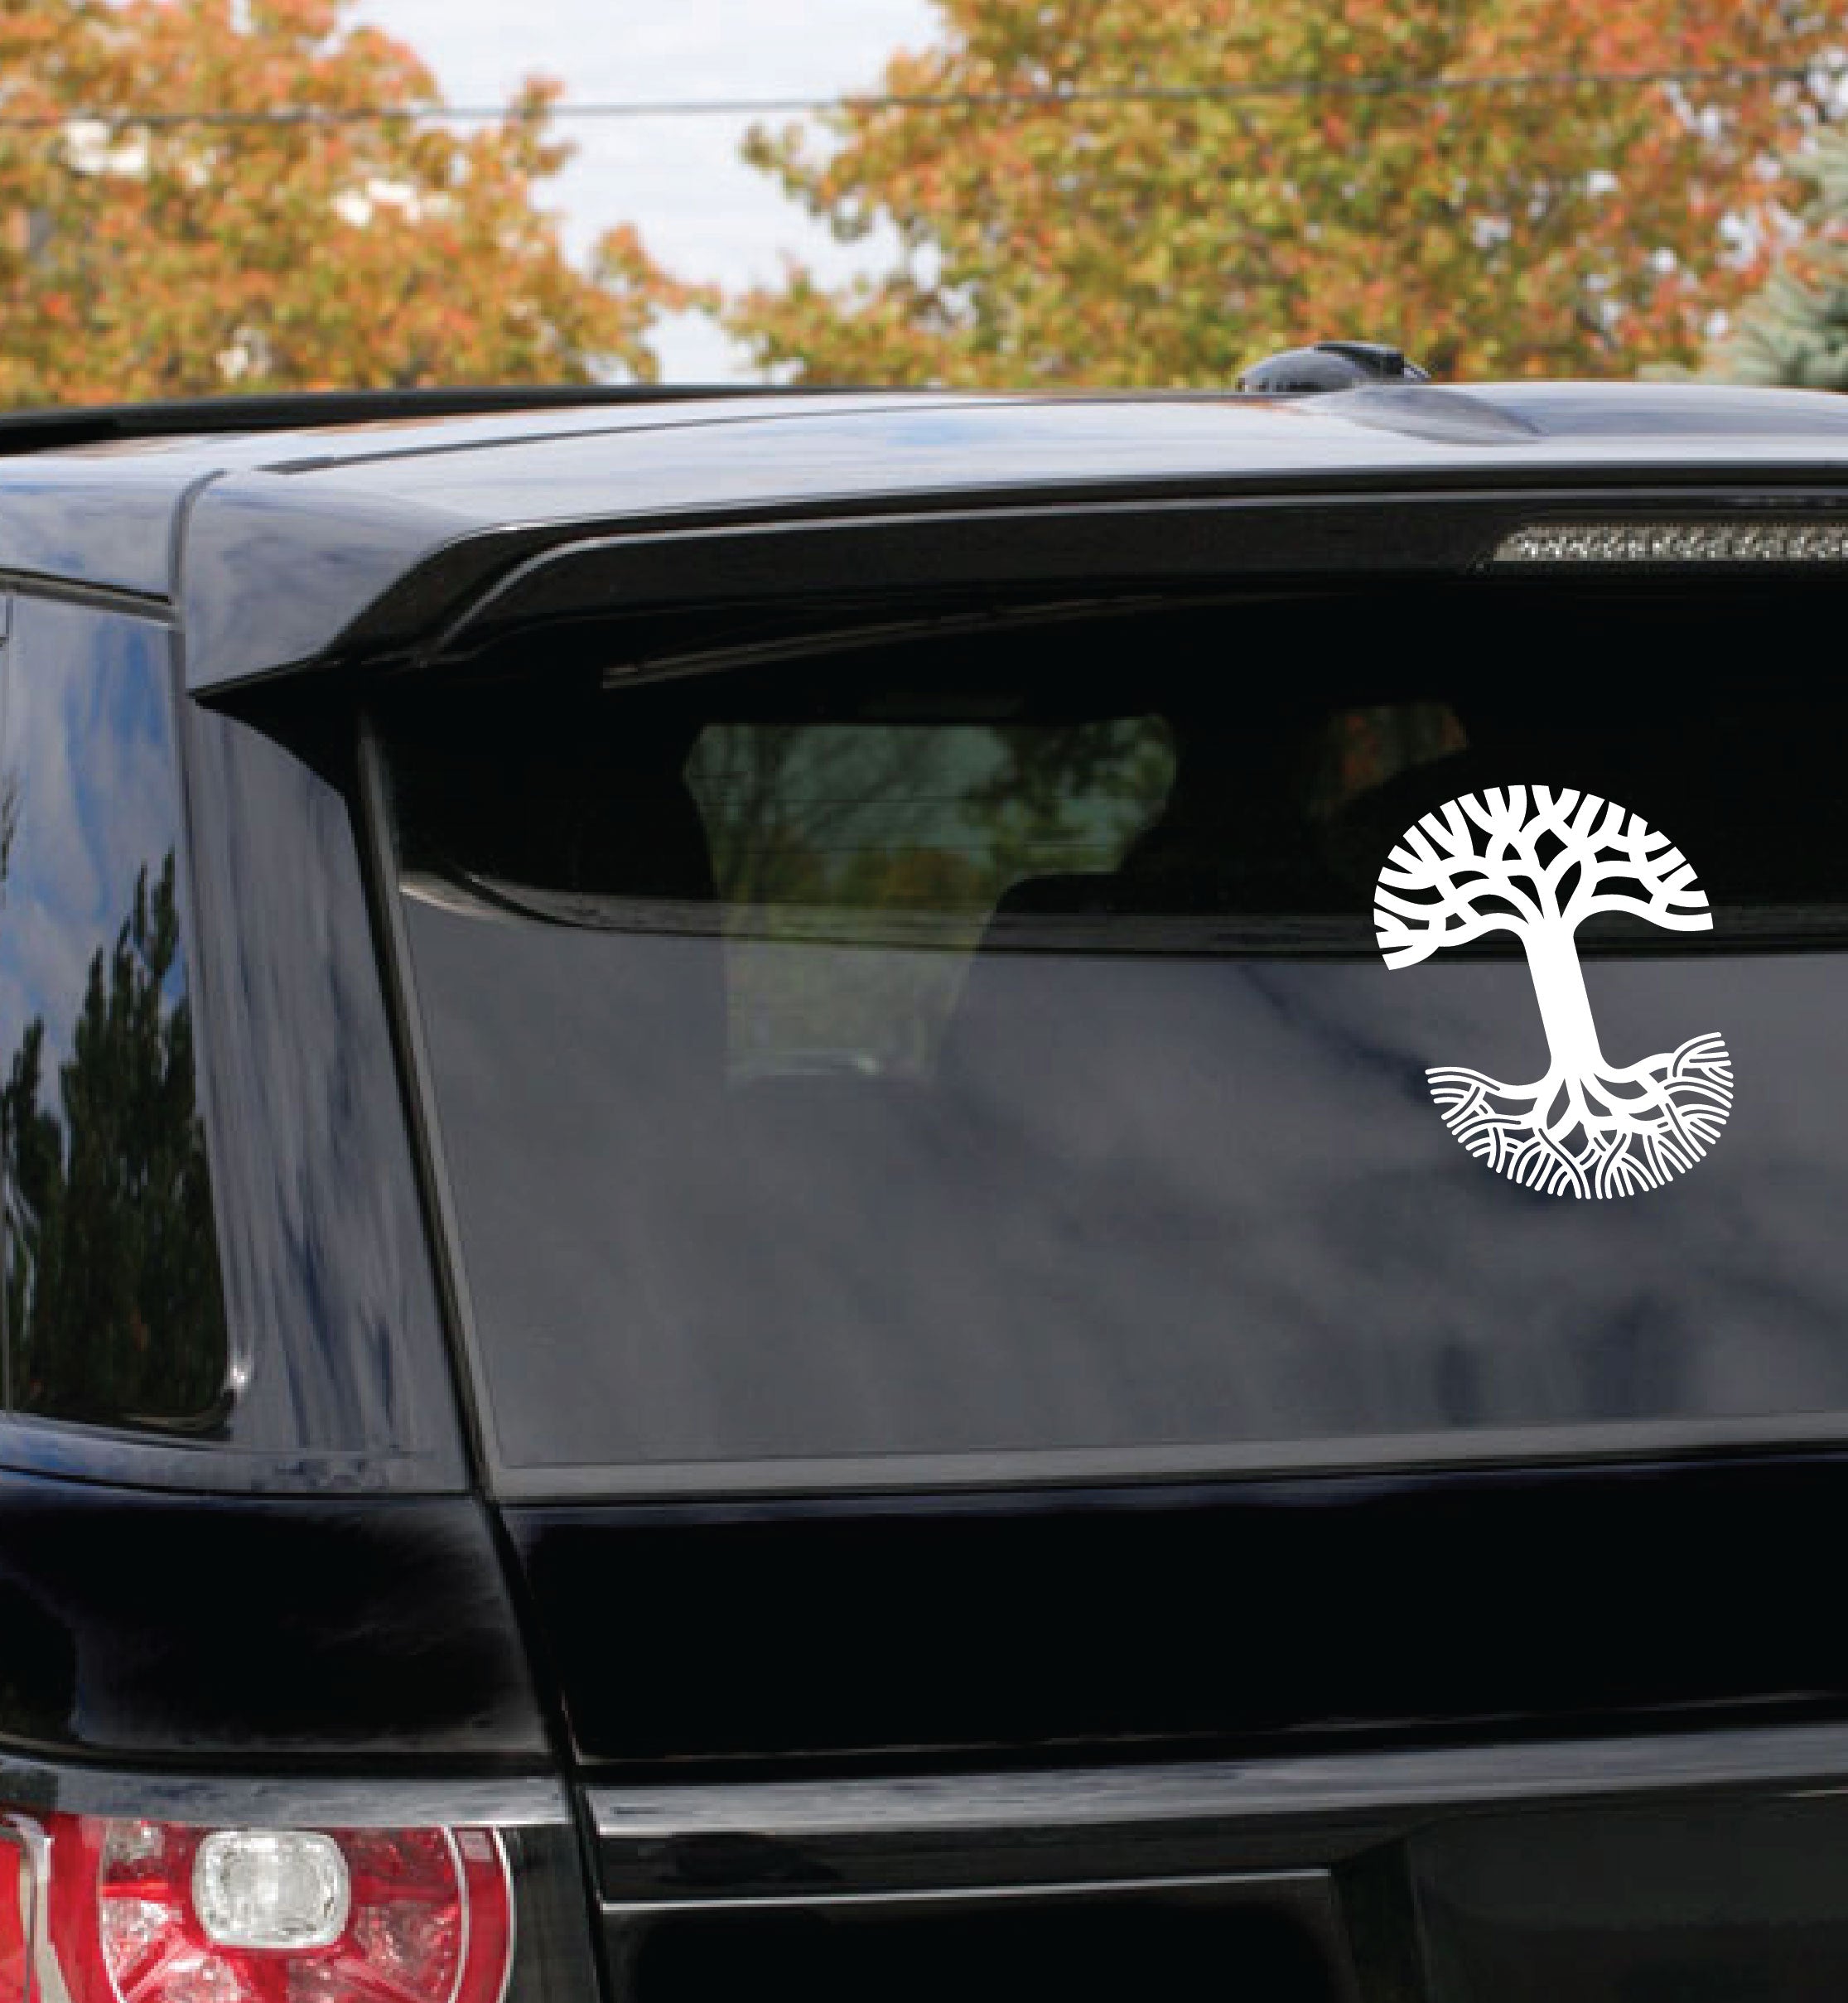 Extra large-sized white Oaklandish tree logo car window decal on the back window of a black SUV car. 